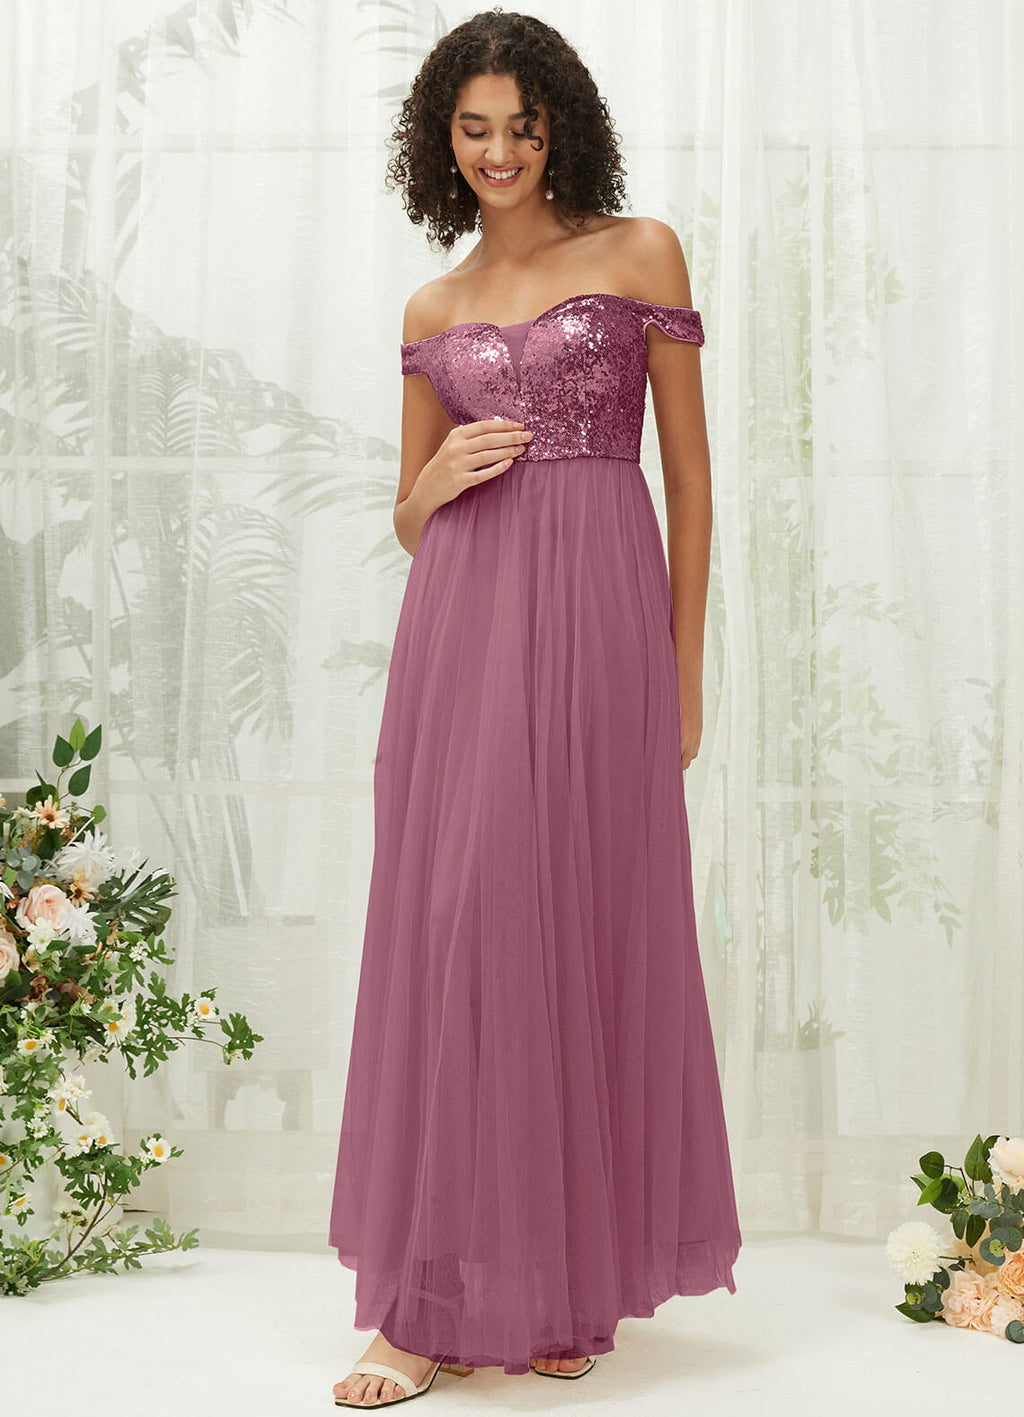 NZ Bridal Dusty Rose Flowy Off Shoulder Sequin Tulle Prom Dress 00277ee Esther a